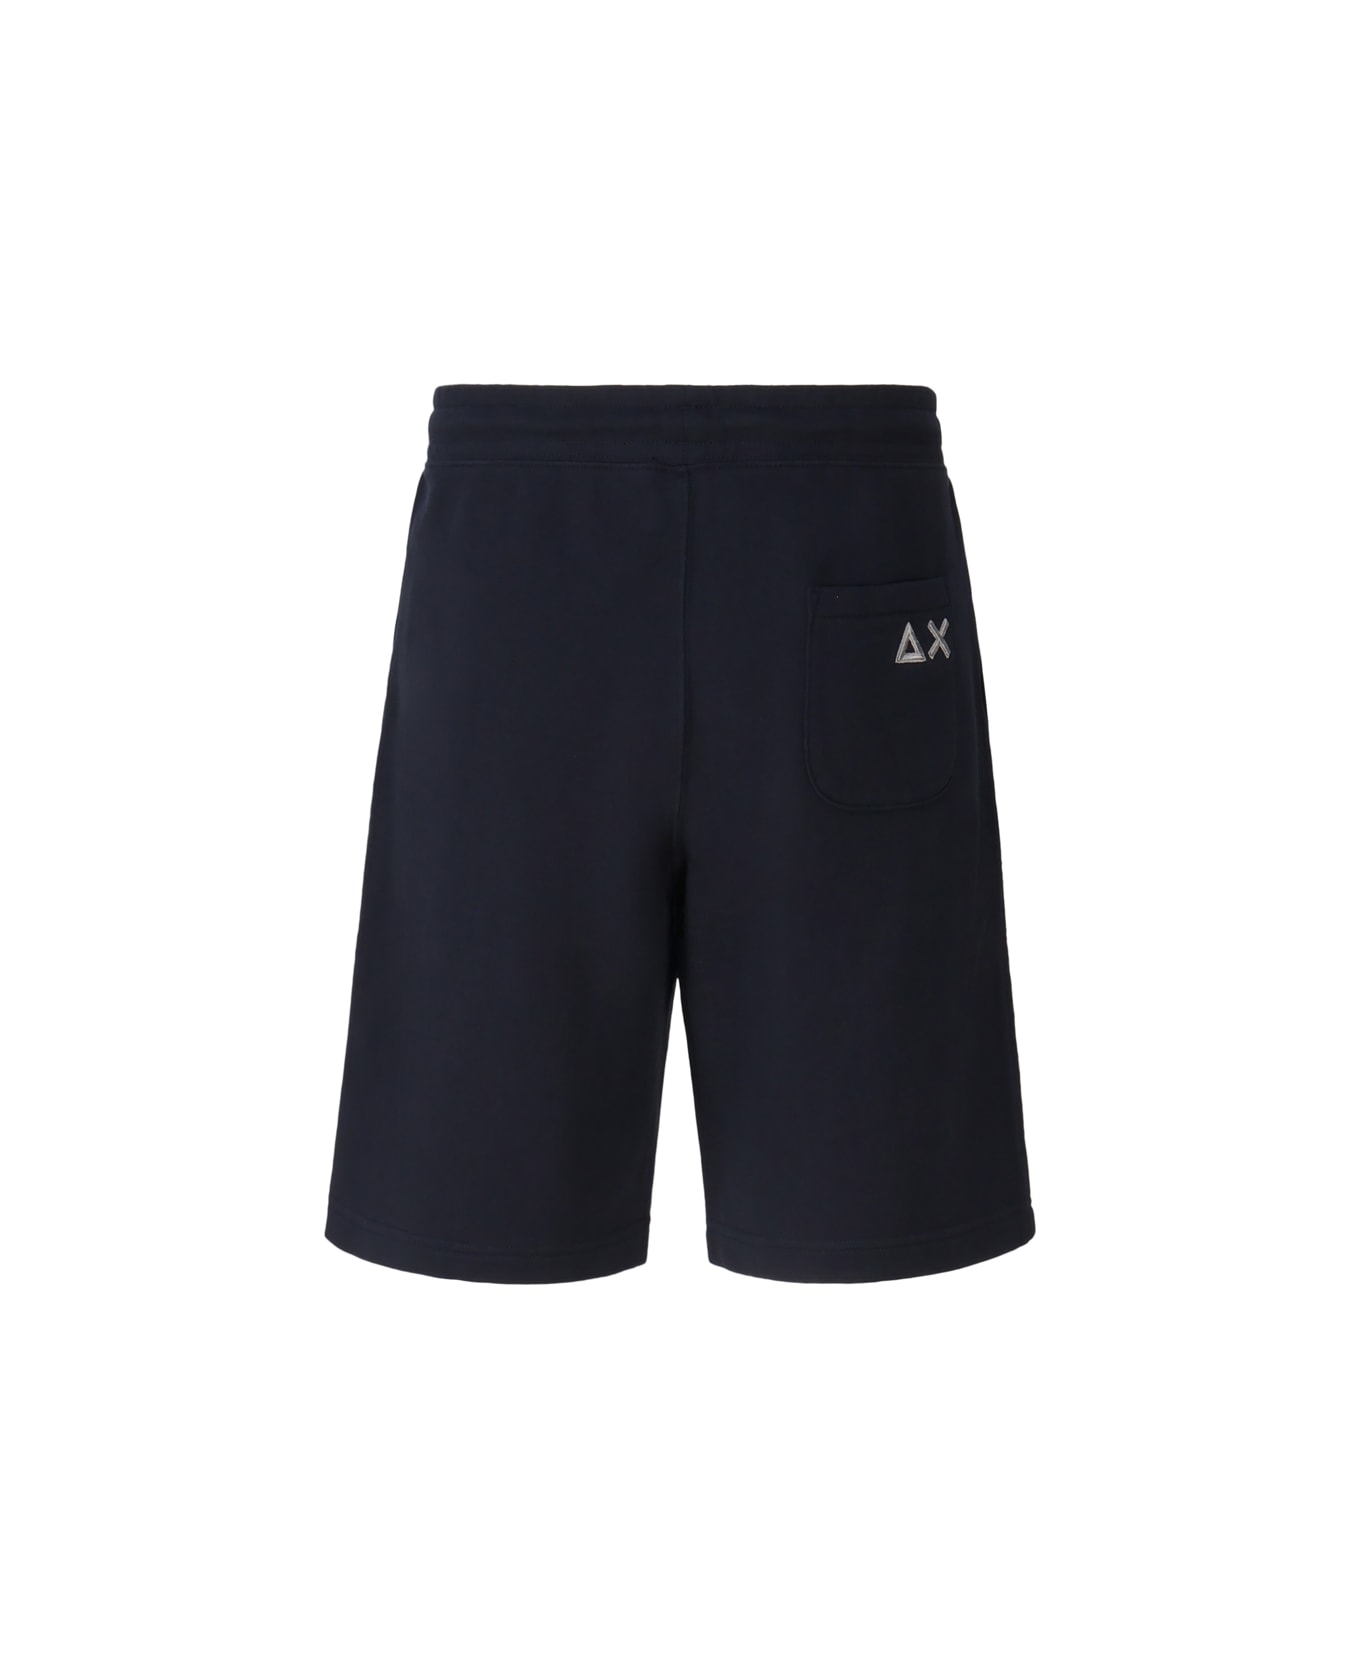 Sun 68 Cotton Blended Shorts - Navy blue ショートパンツ